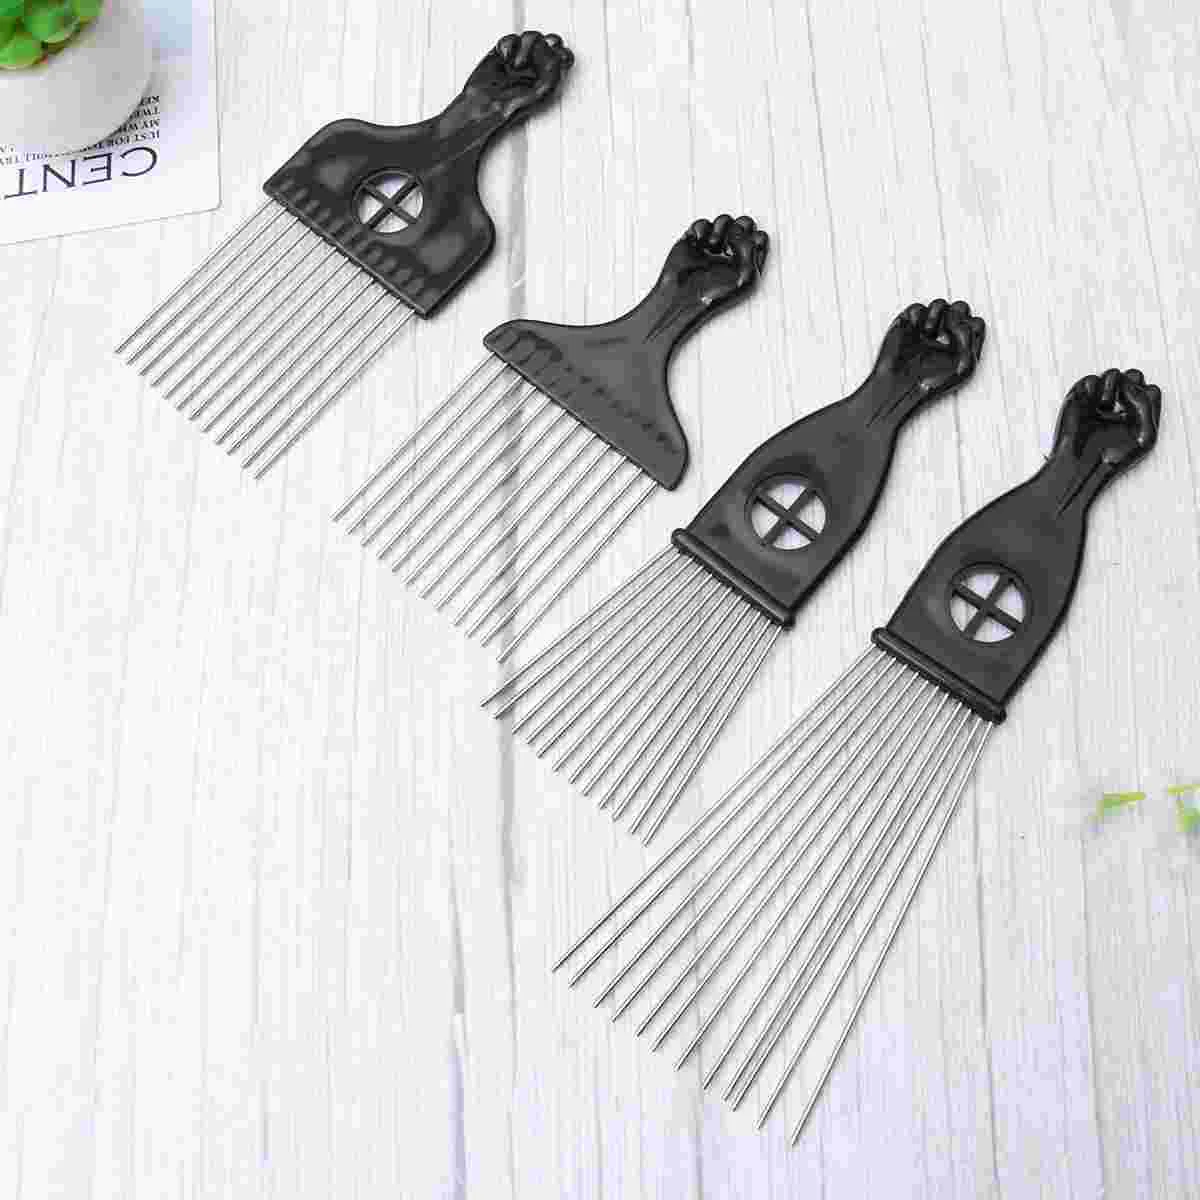 

Comb Hair Pick Metal Afro Parting Barber Brush Salon Kit Groomning Hairstyling Combs Pintail Detangler Lifting Fist